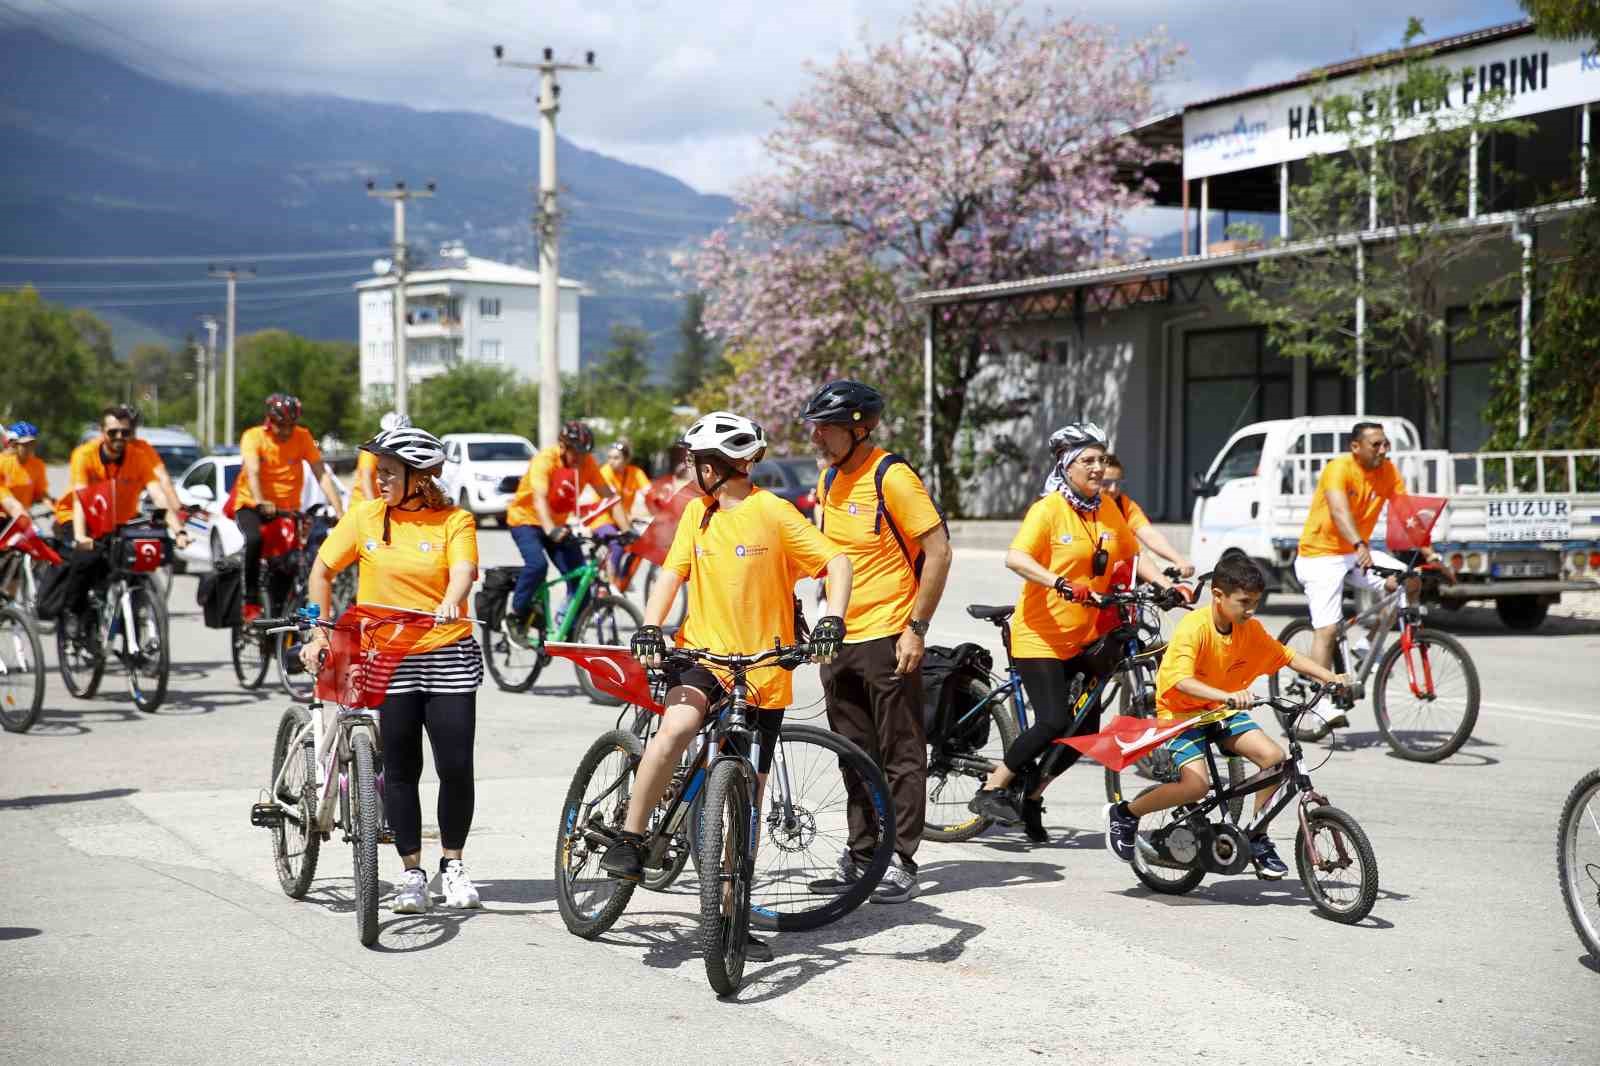 Büyükşehirden kırsalda vatandaşlara bisiklet turu
